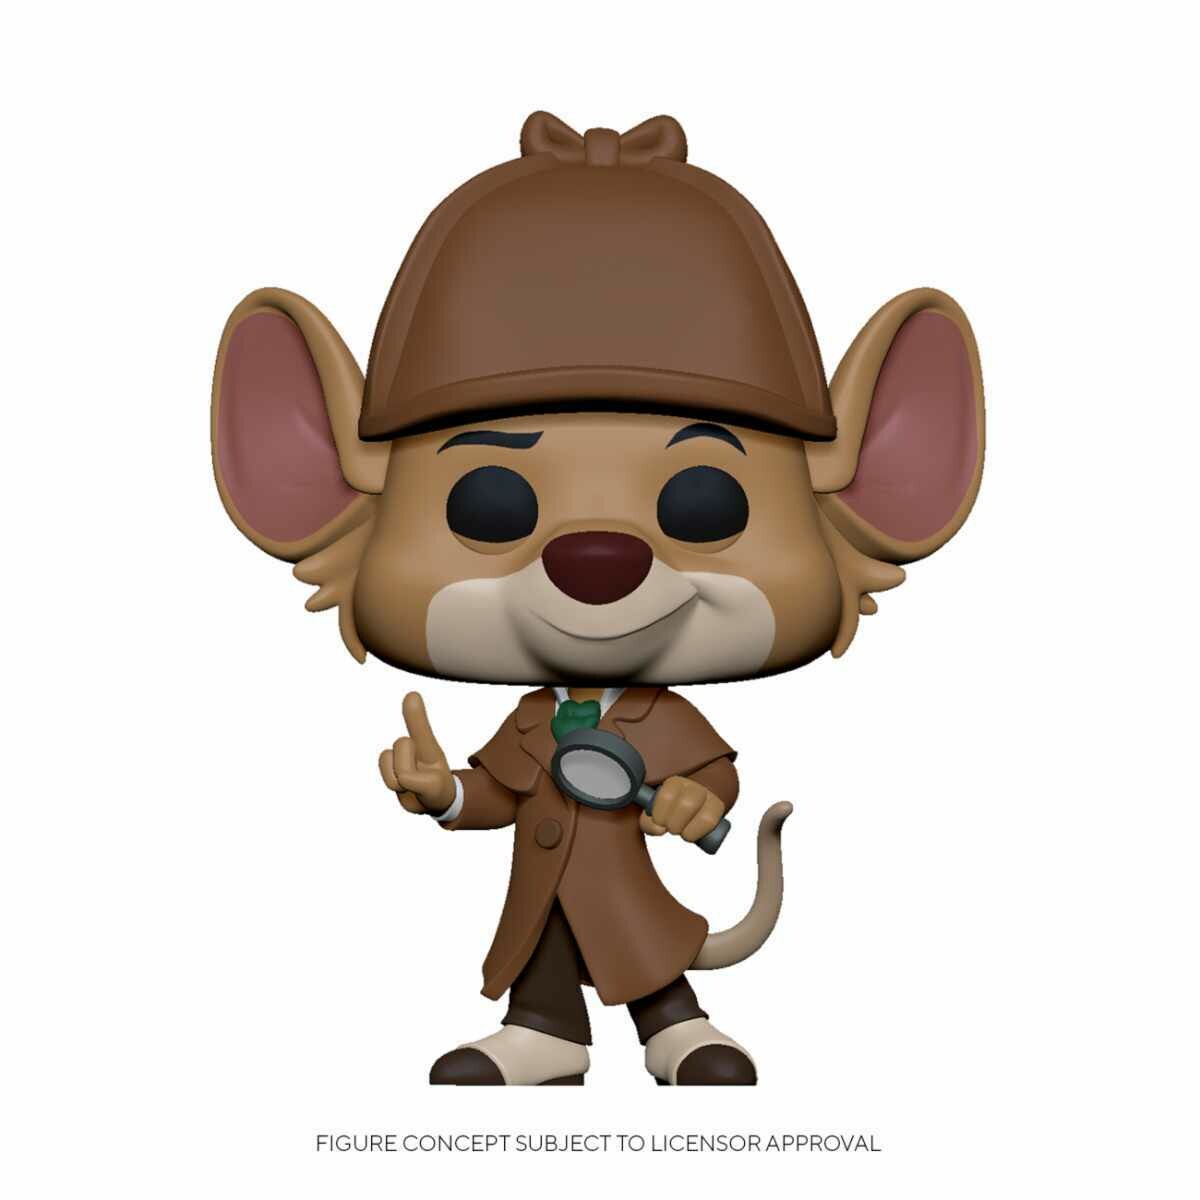 Basil Funko Pop! Disney Great Mouse Detective